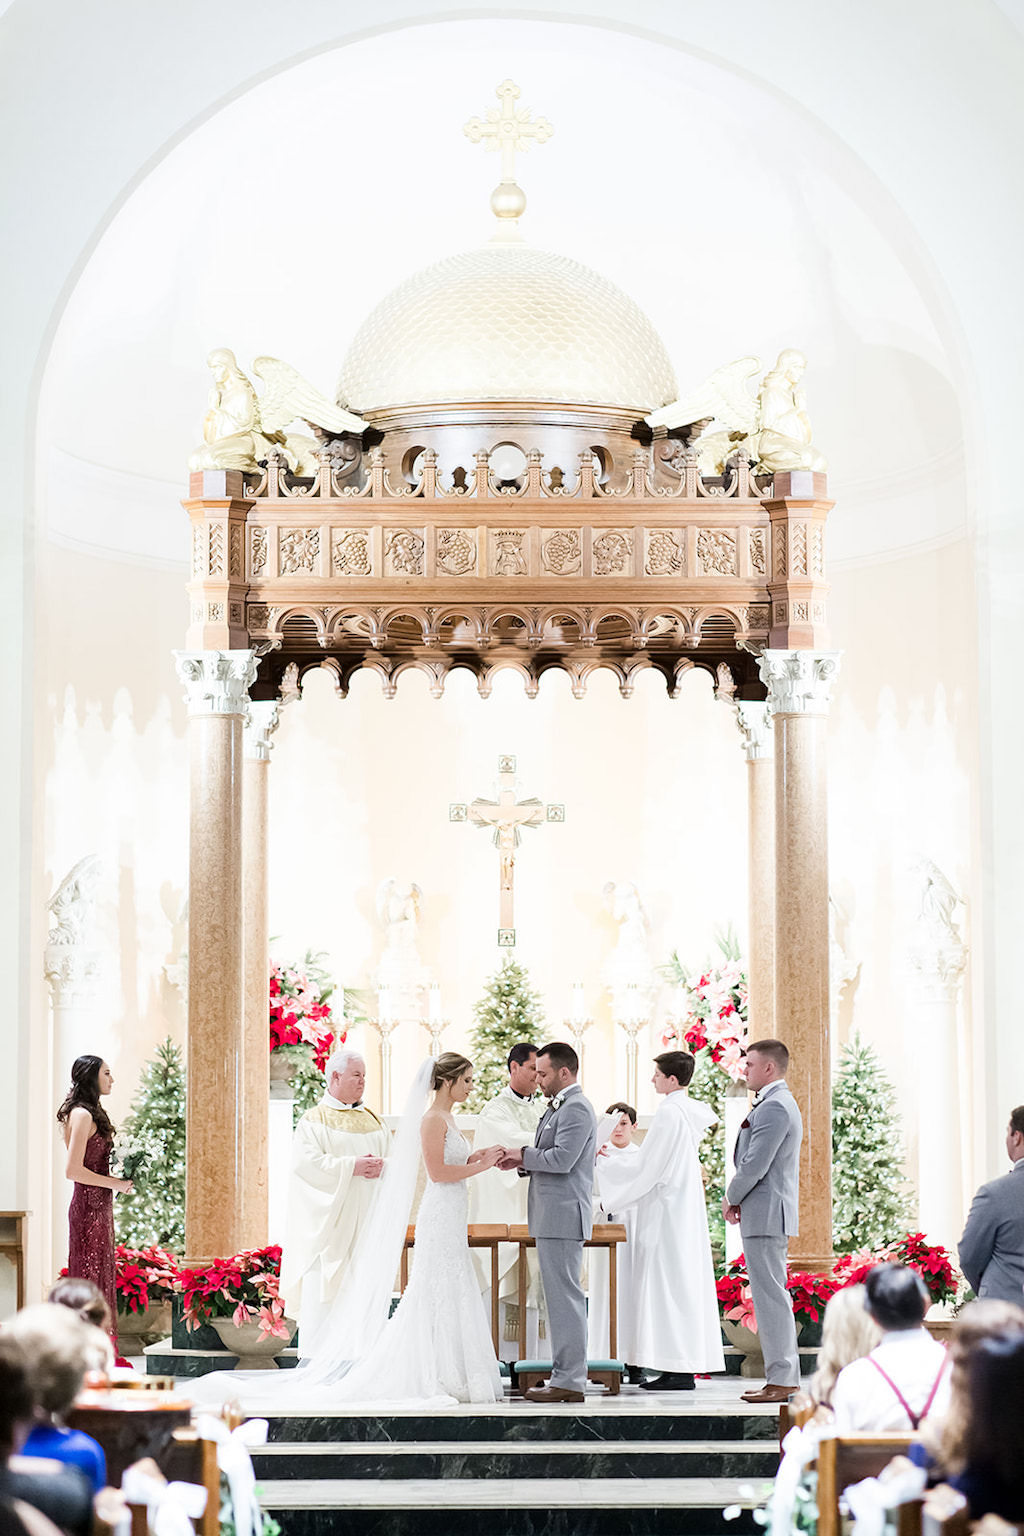 St. Petersburg Bride and Groom Exchange Vows in Catholic Wedding Ceremony, Christmas Wedding Decor | Tampa Bay Wedding Photographers Shauna and Jordon Photography